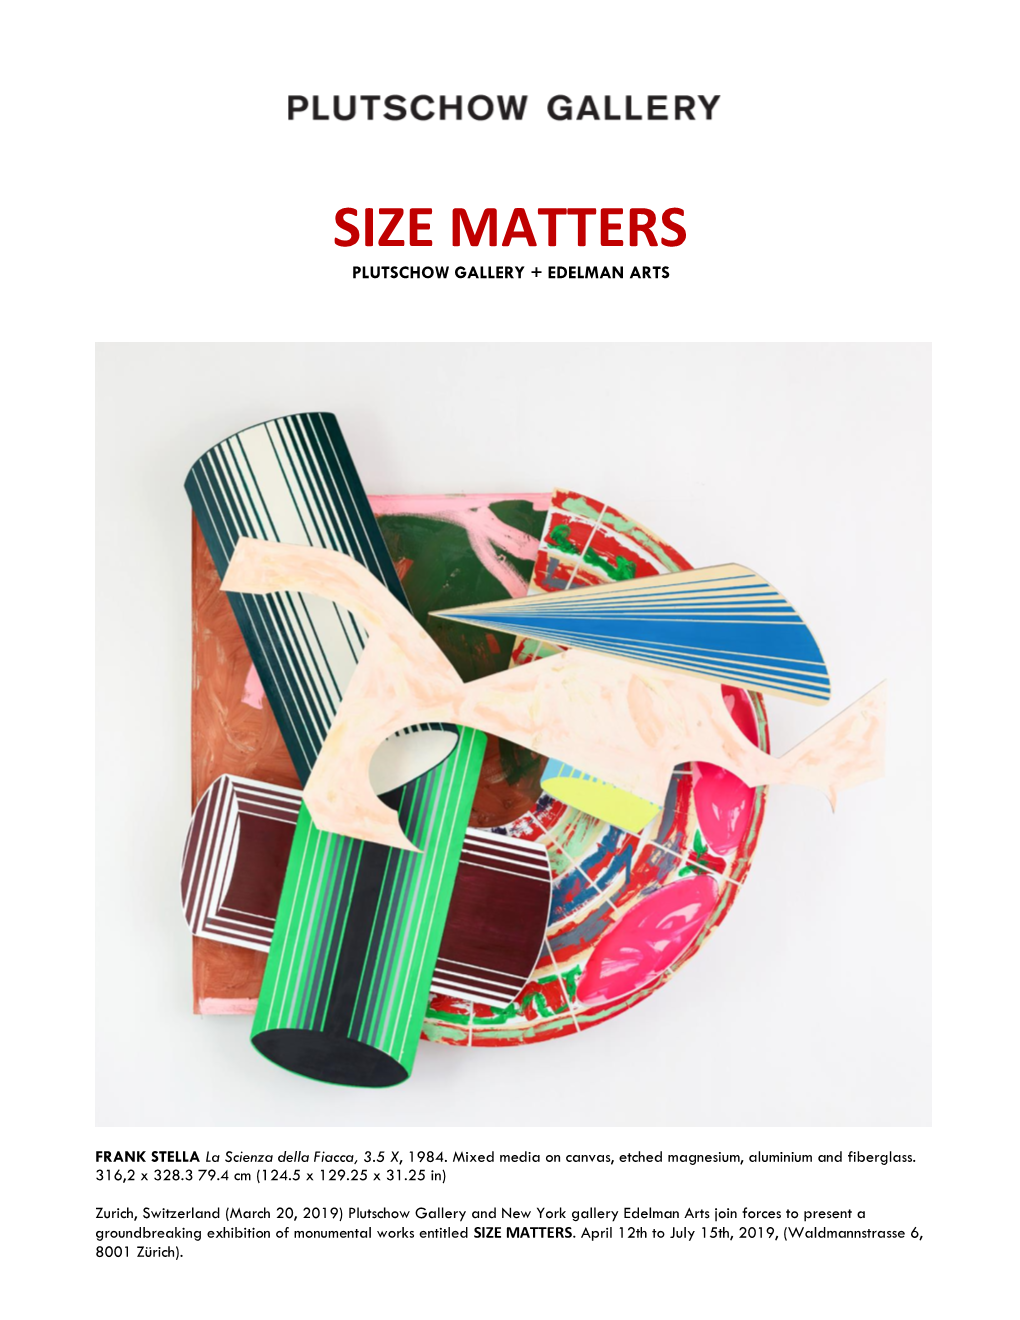 Size Matters Plutschow Gallery + Edelman Arts